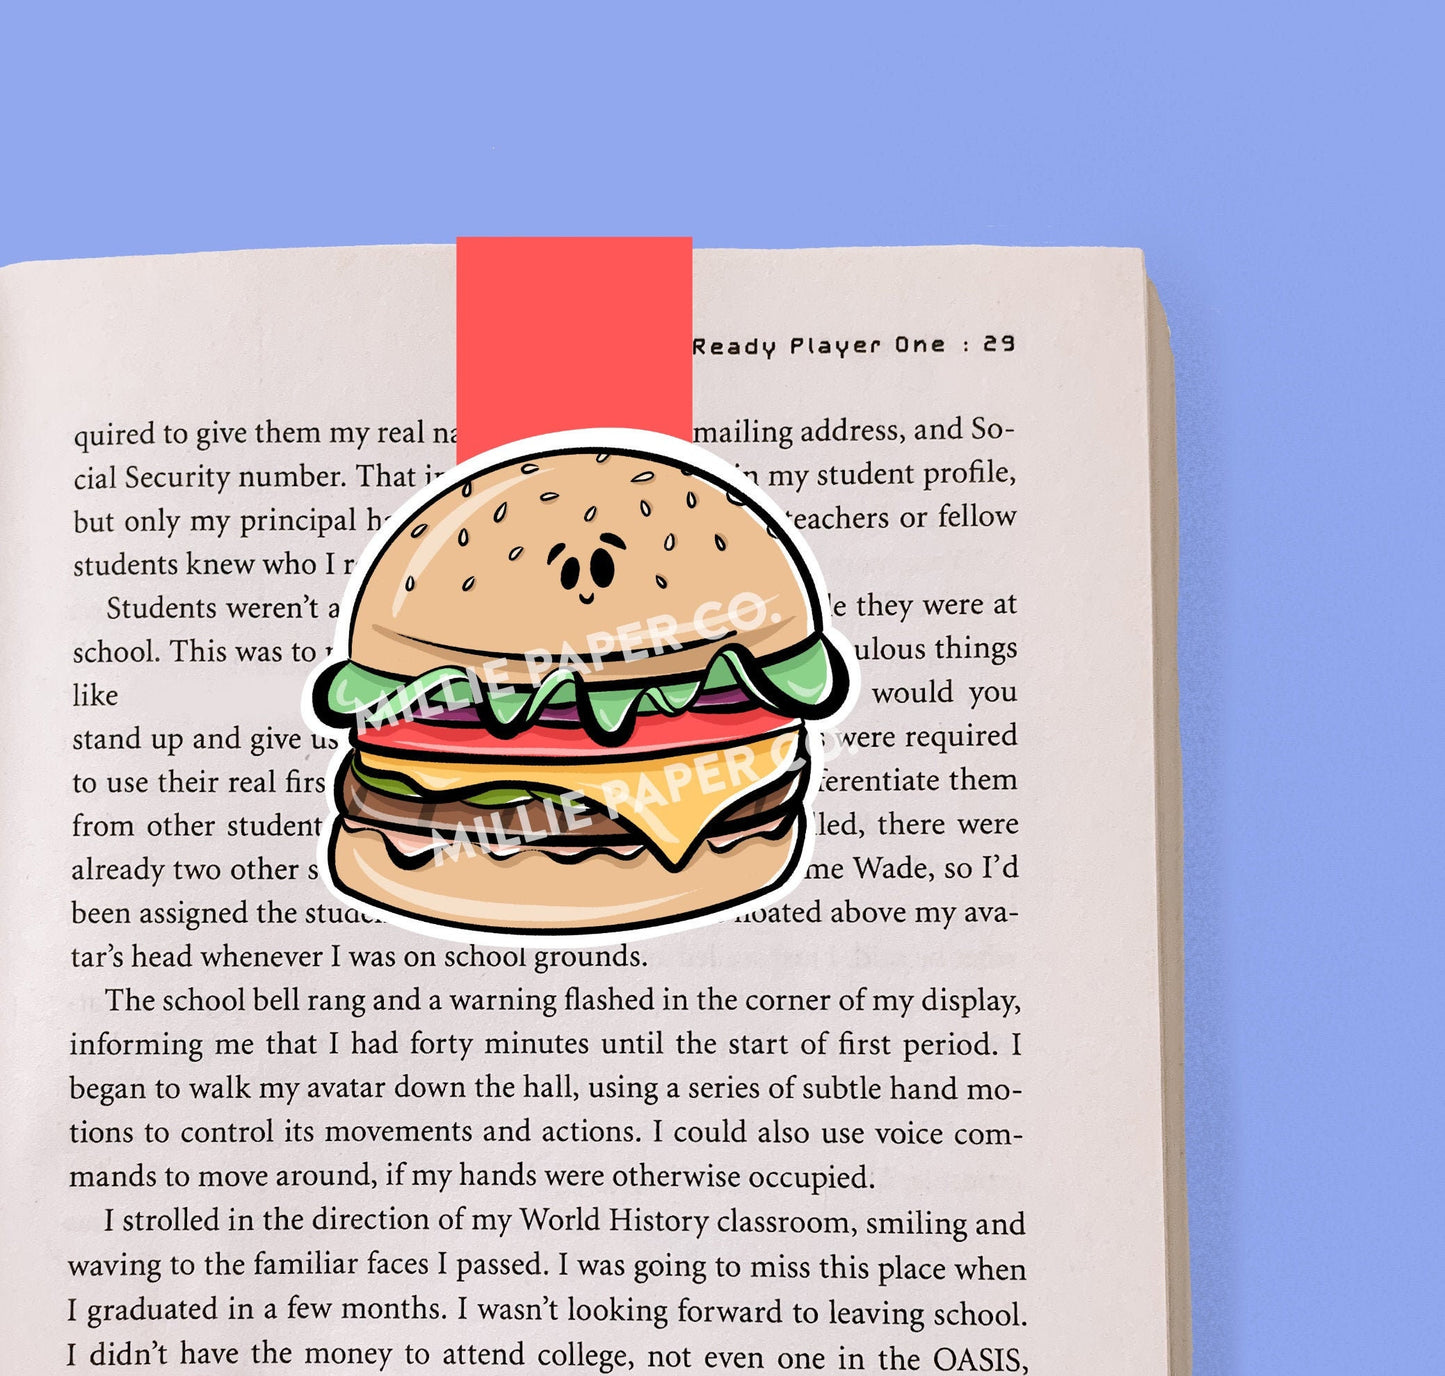 Hamburger Magnetic Bookmark